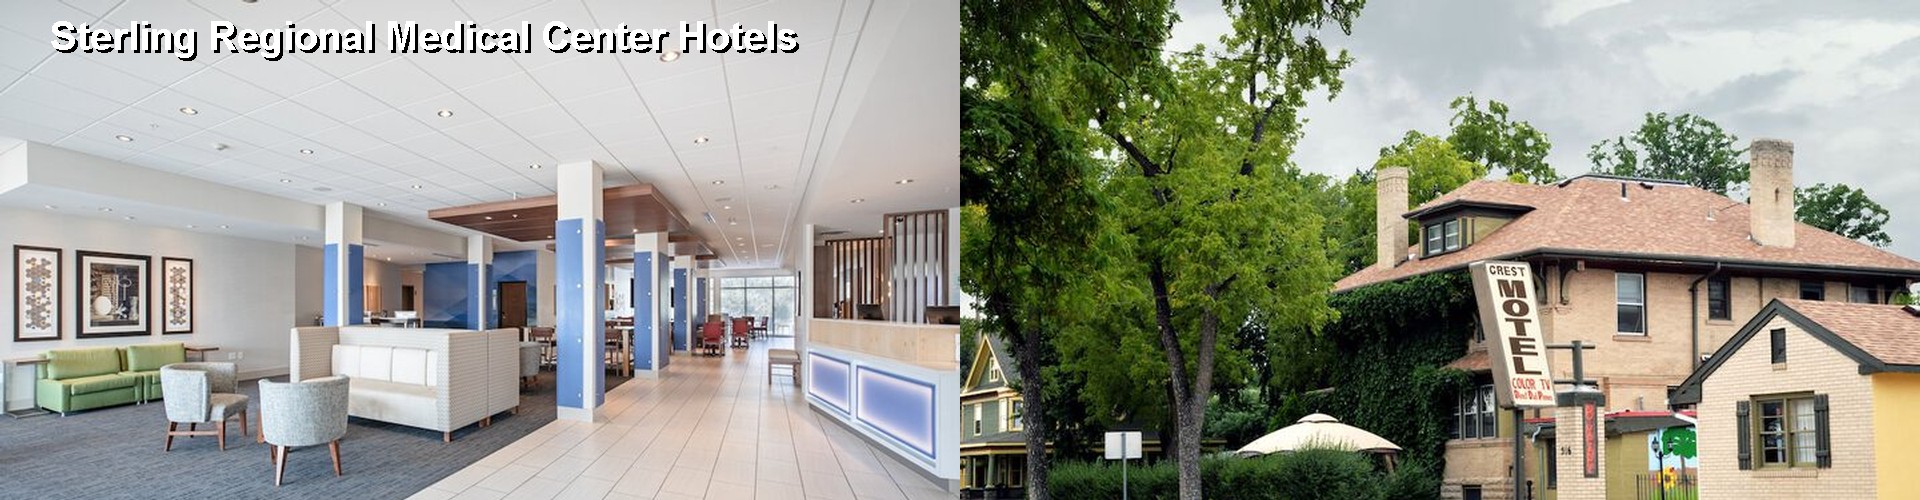 3 Best Hotels near Sterling Regional Medical Center